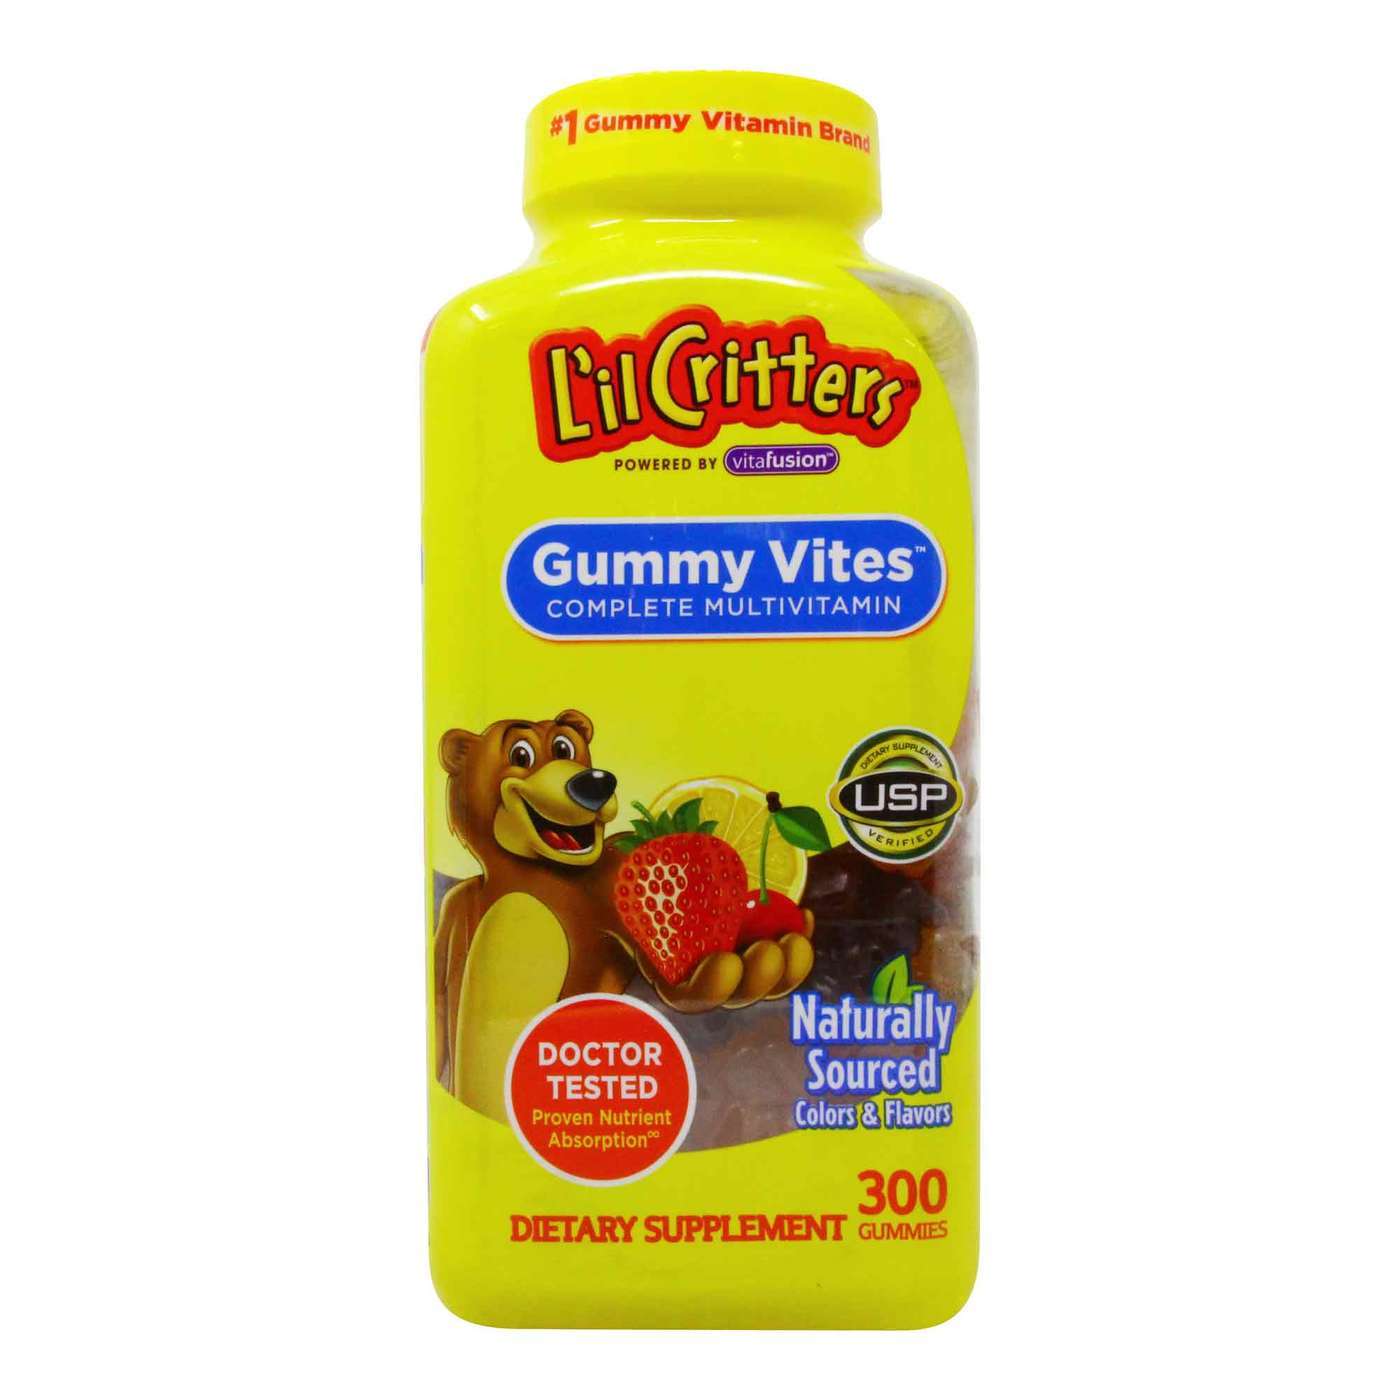 lil-critters-gummy-vites-complete-multivitamin-300-gummies